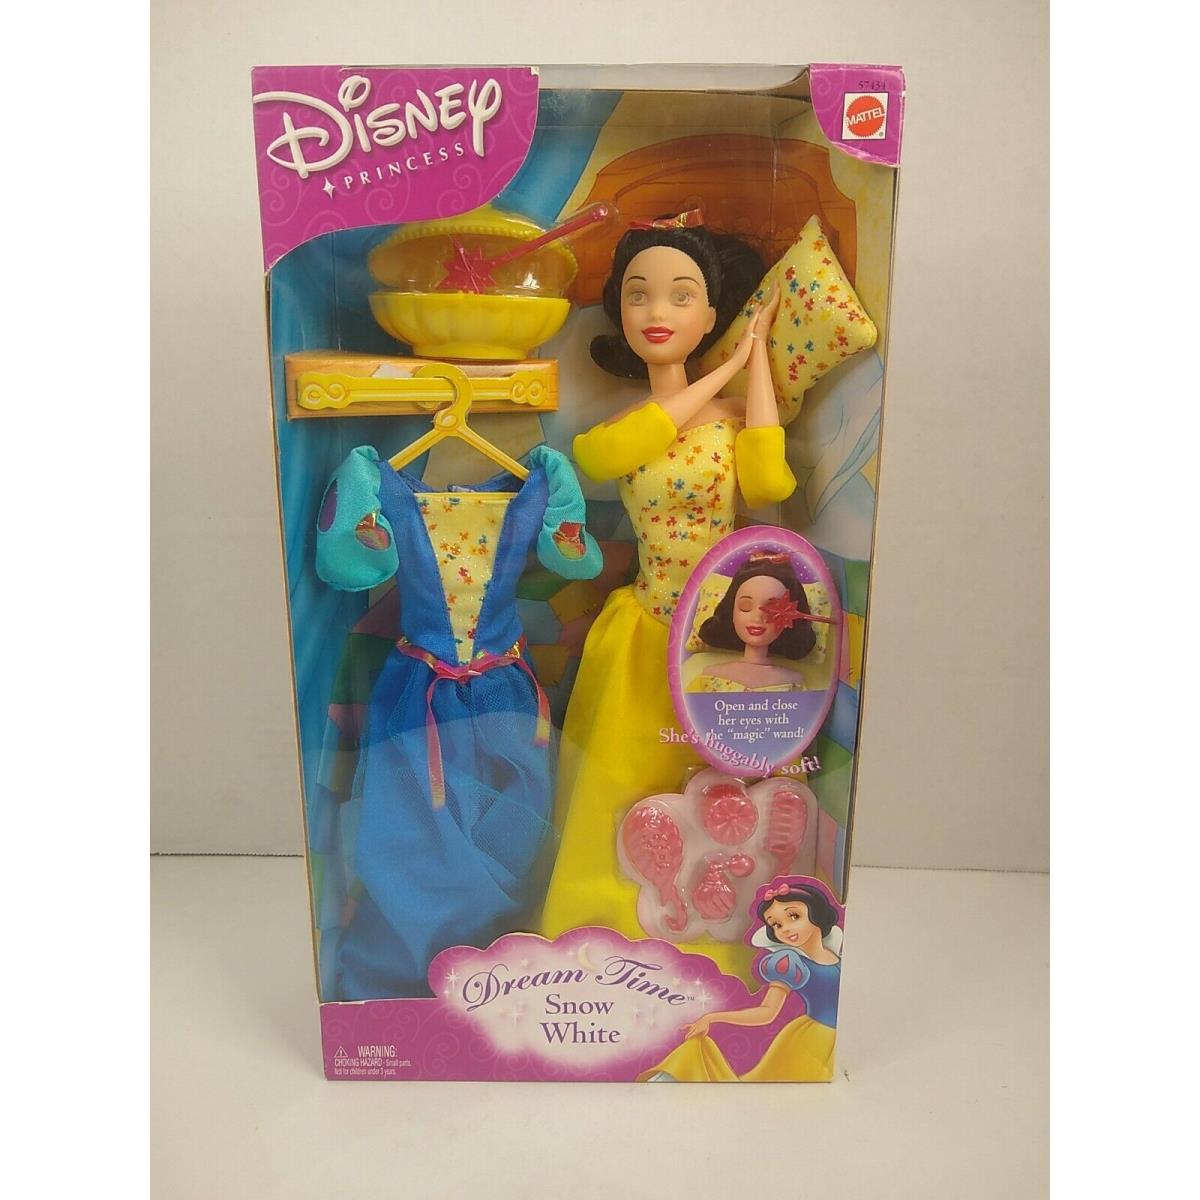 Disney Princess Dream Time Snow White Doll 2002 Mattel 57434 Very Rare Htf Nrfb